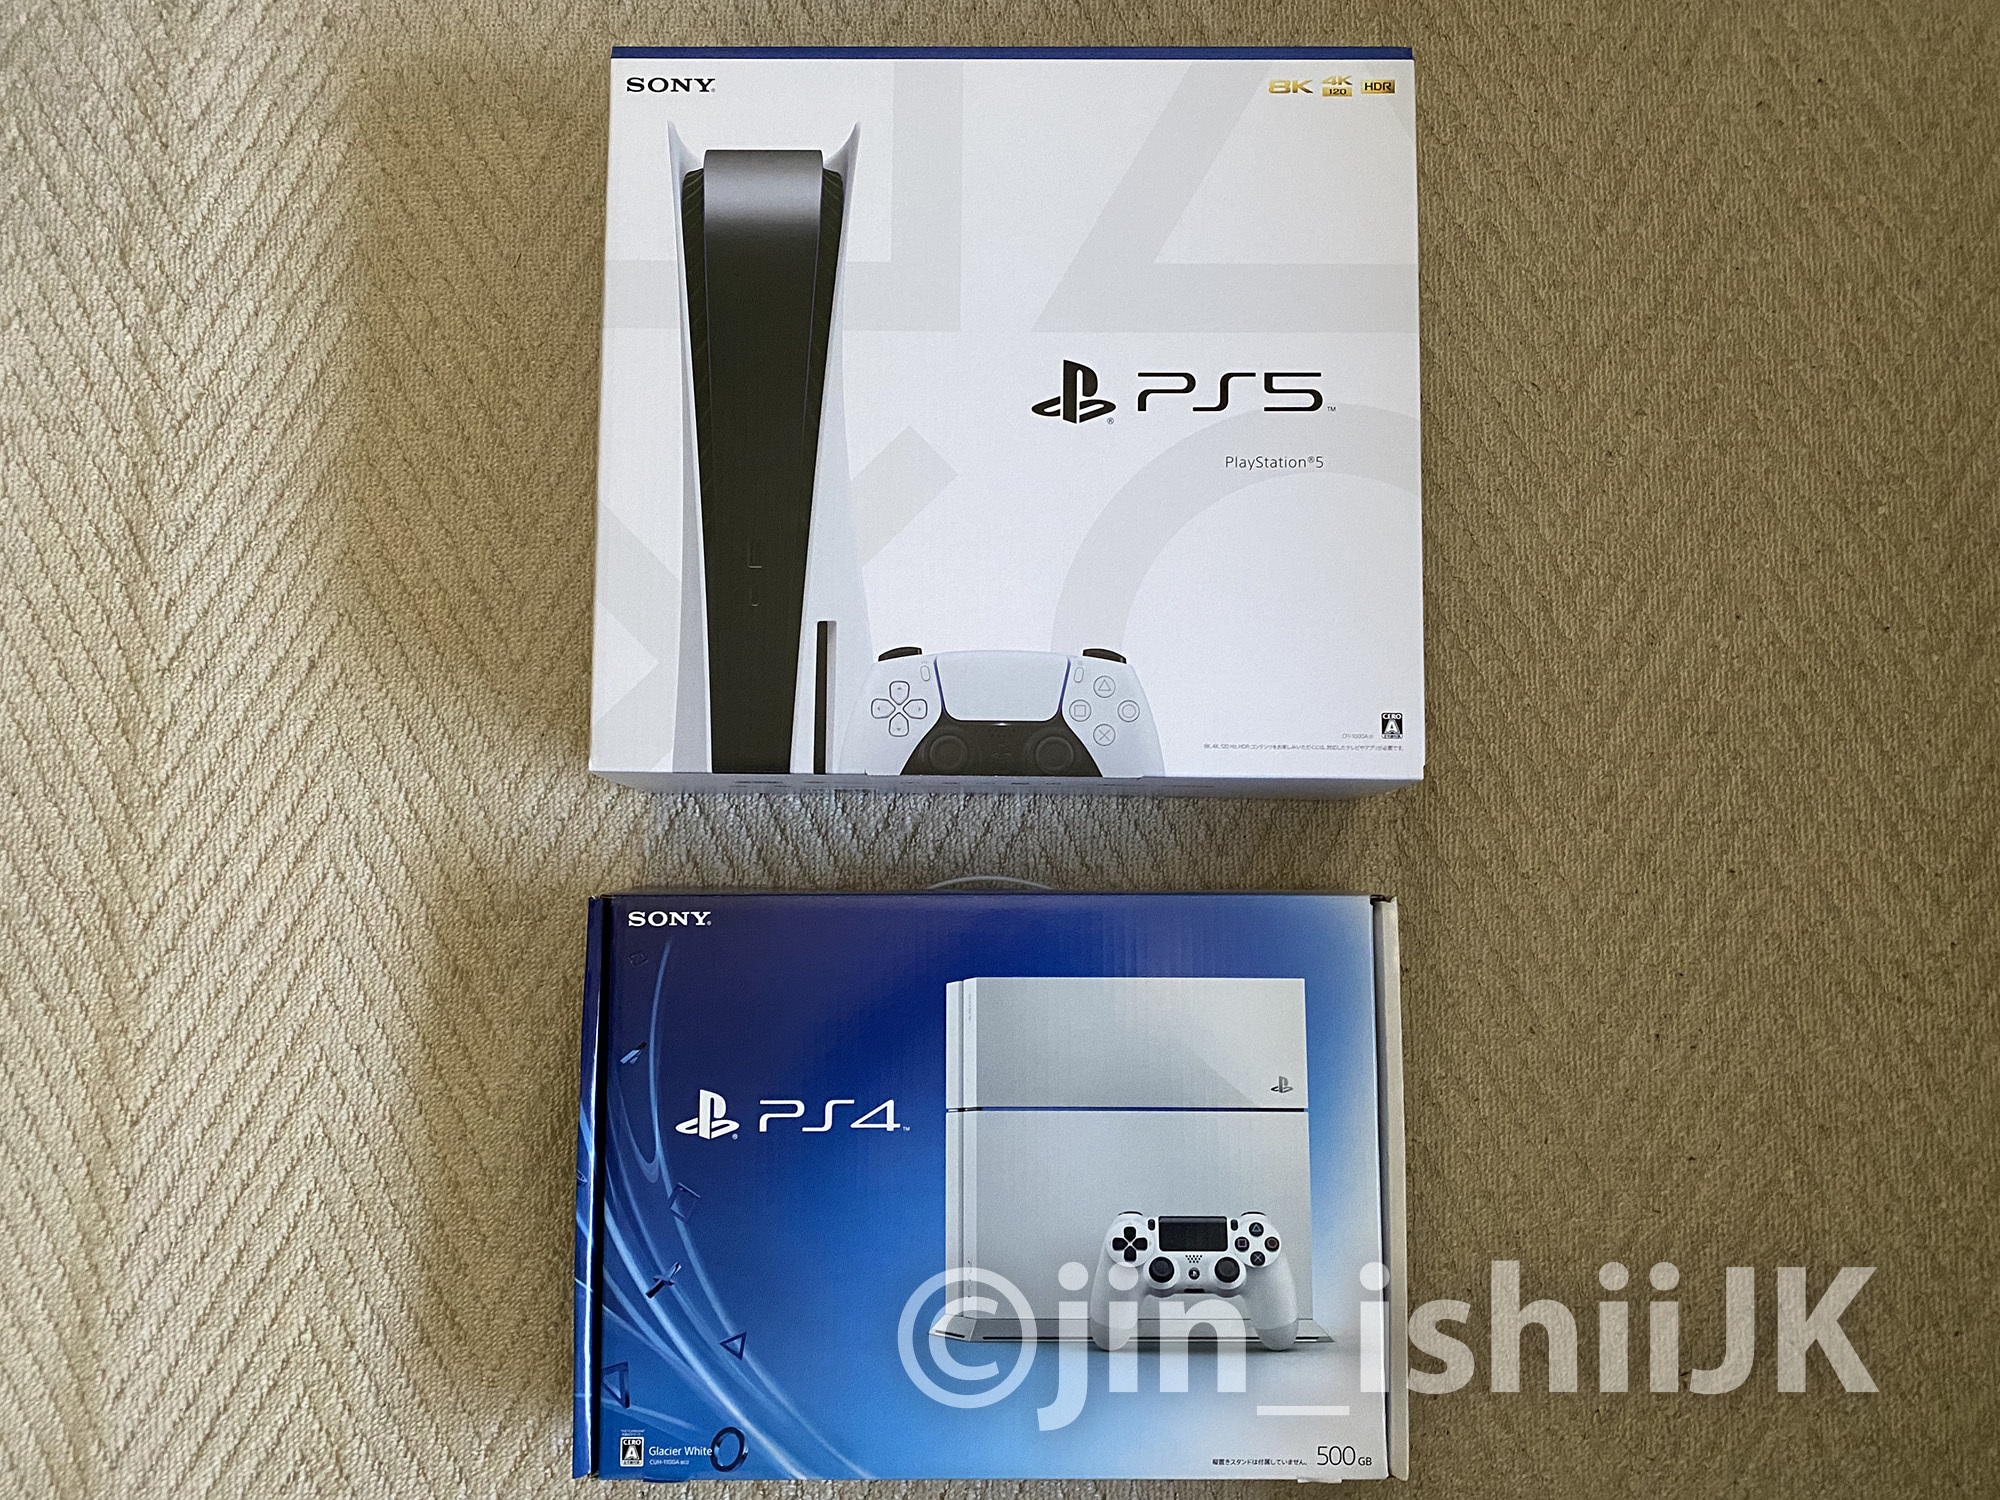 jin_ishiijkネタブログ PS5が発売日に届きました。が、しかし